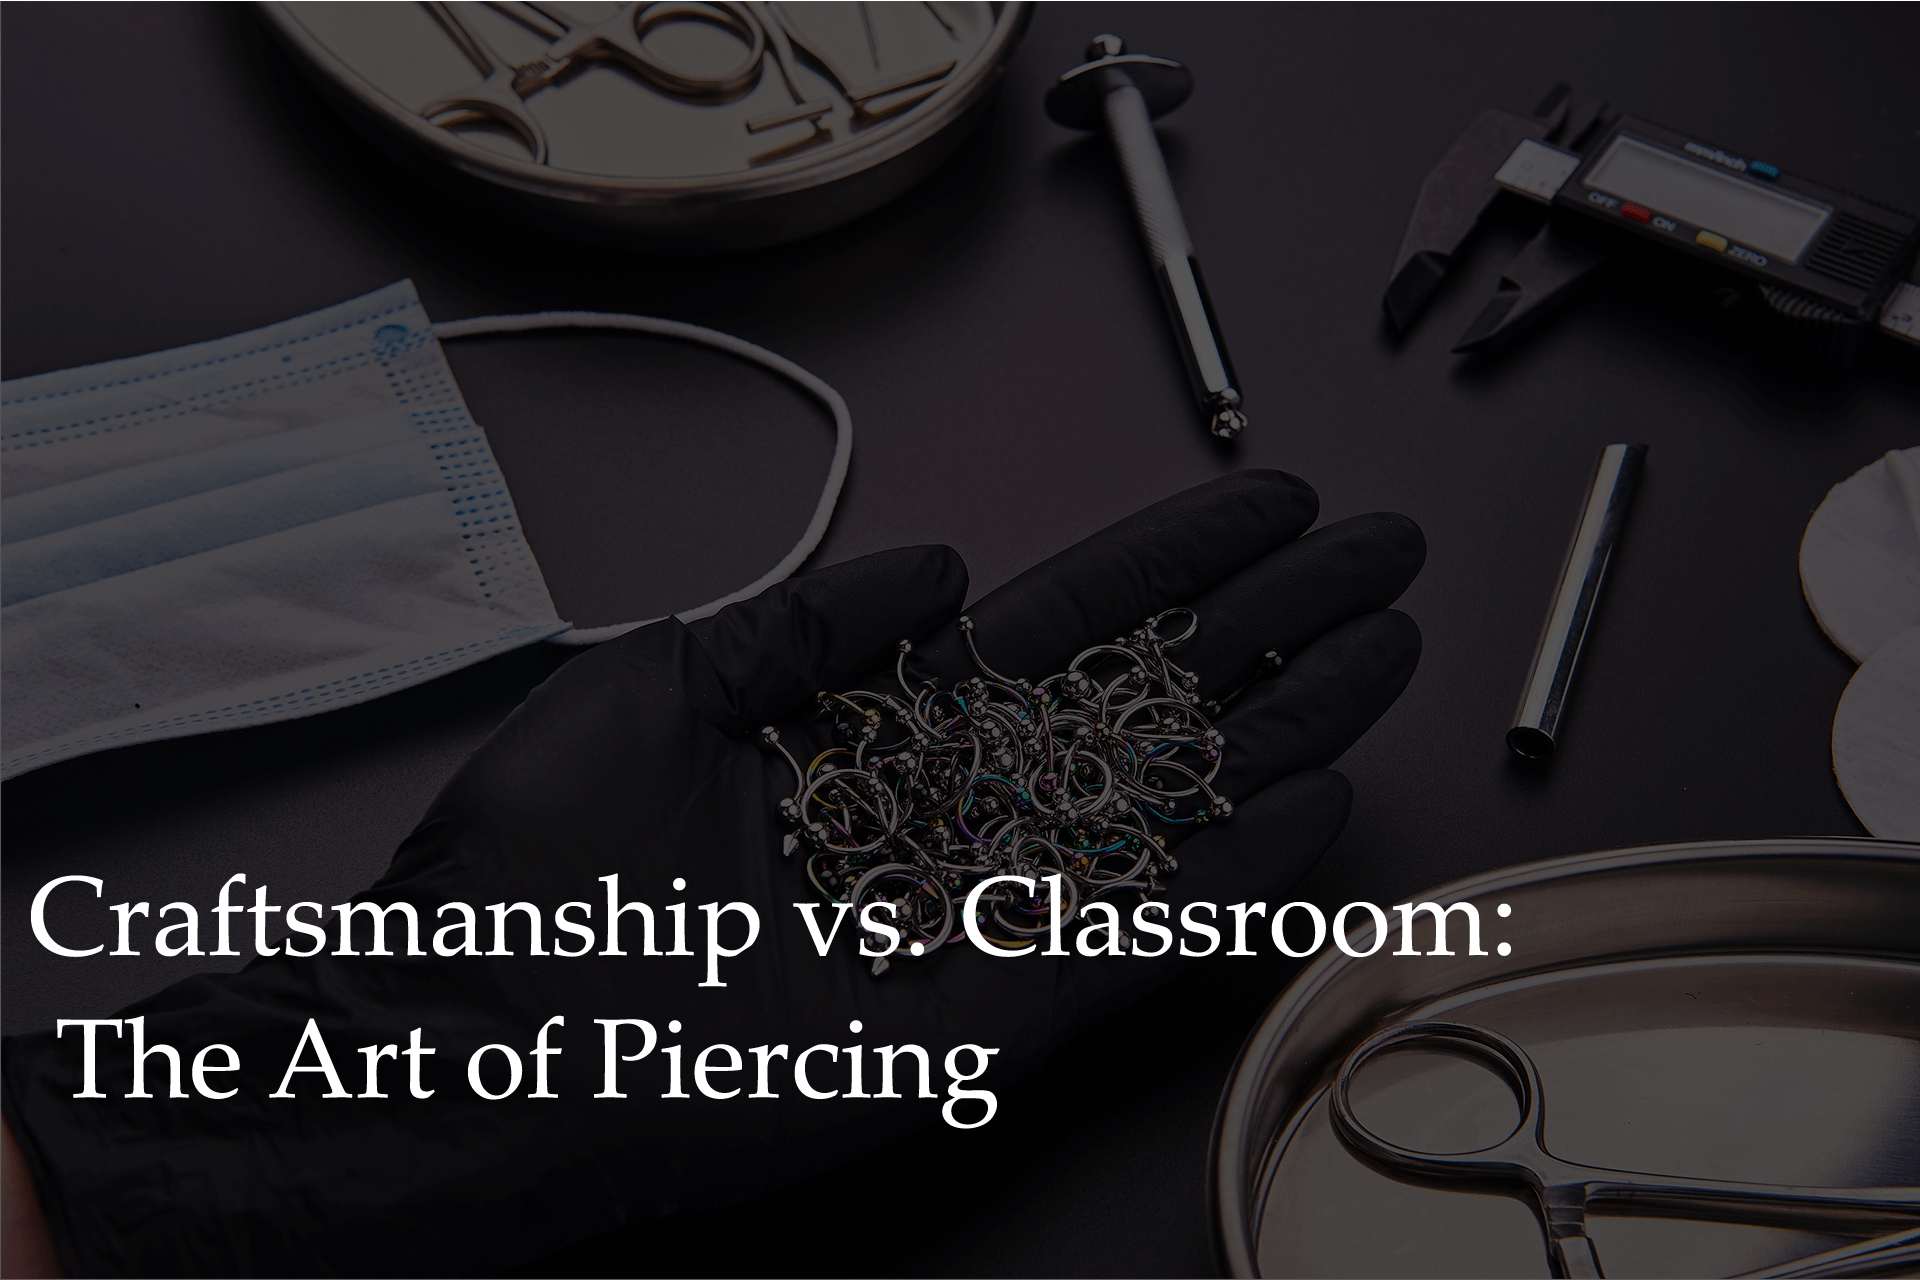 Craftsmanship vs. Classroom: The Art of Piercing